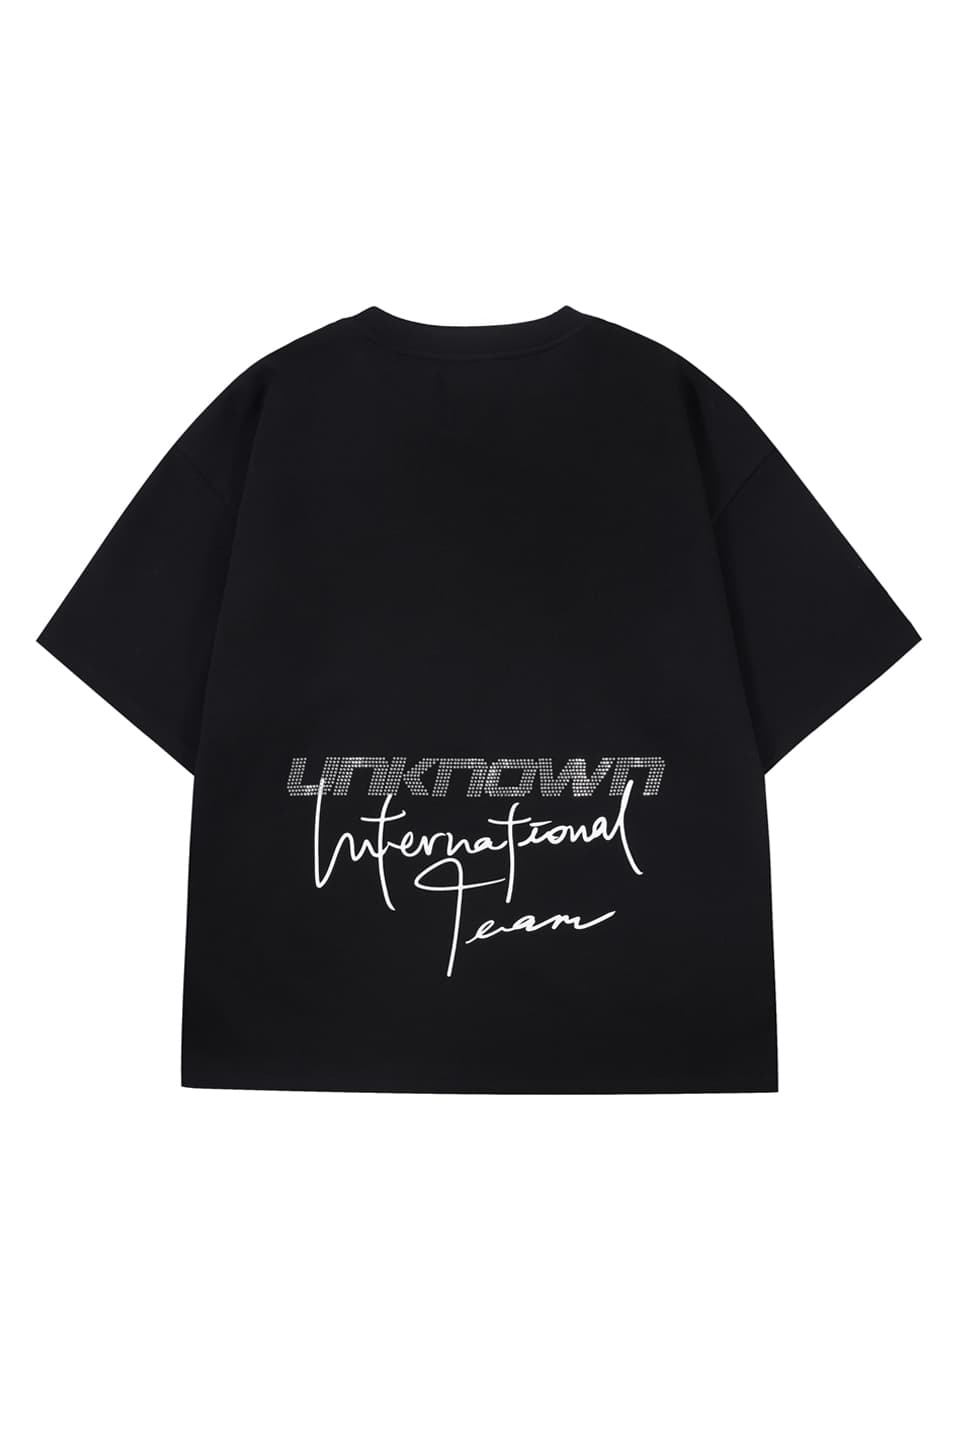 Tシャツ｜Unknown London (アンノウン・ロンドン)｜Uniform Tee｜公式